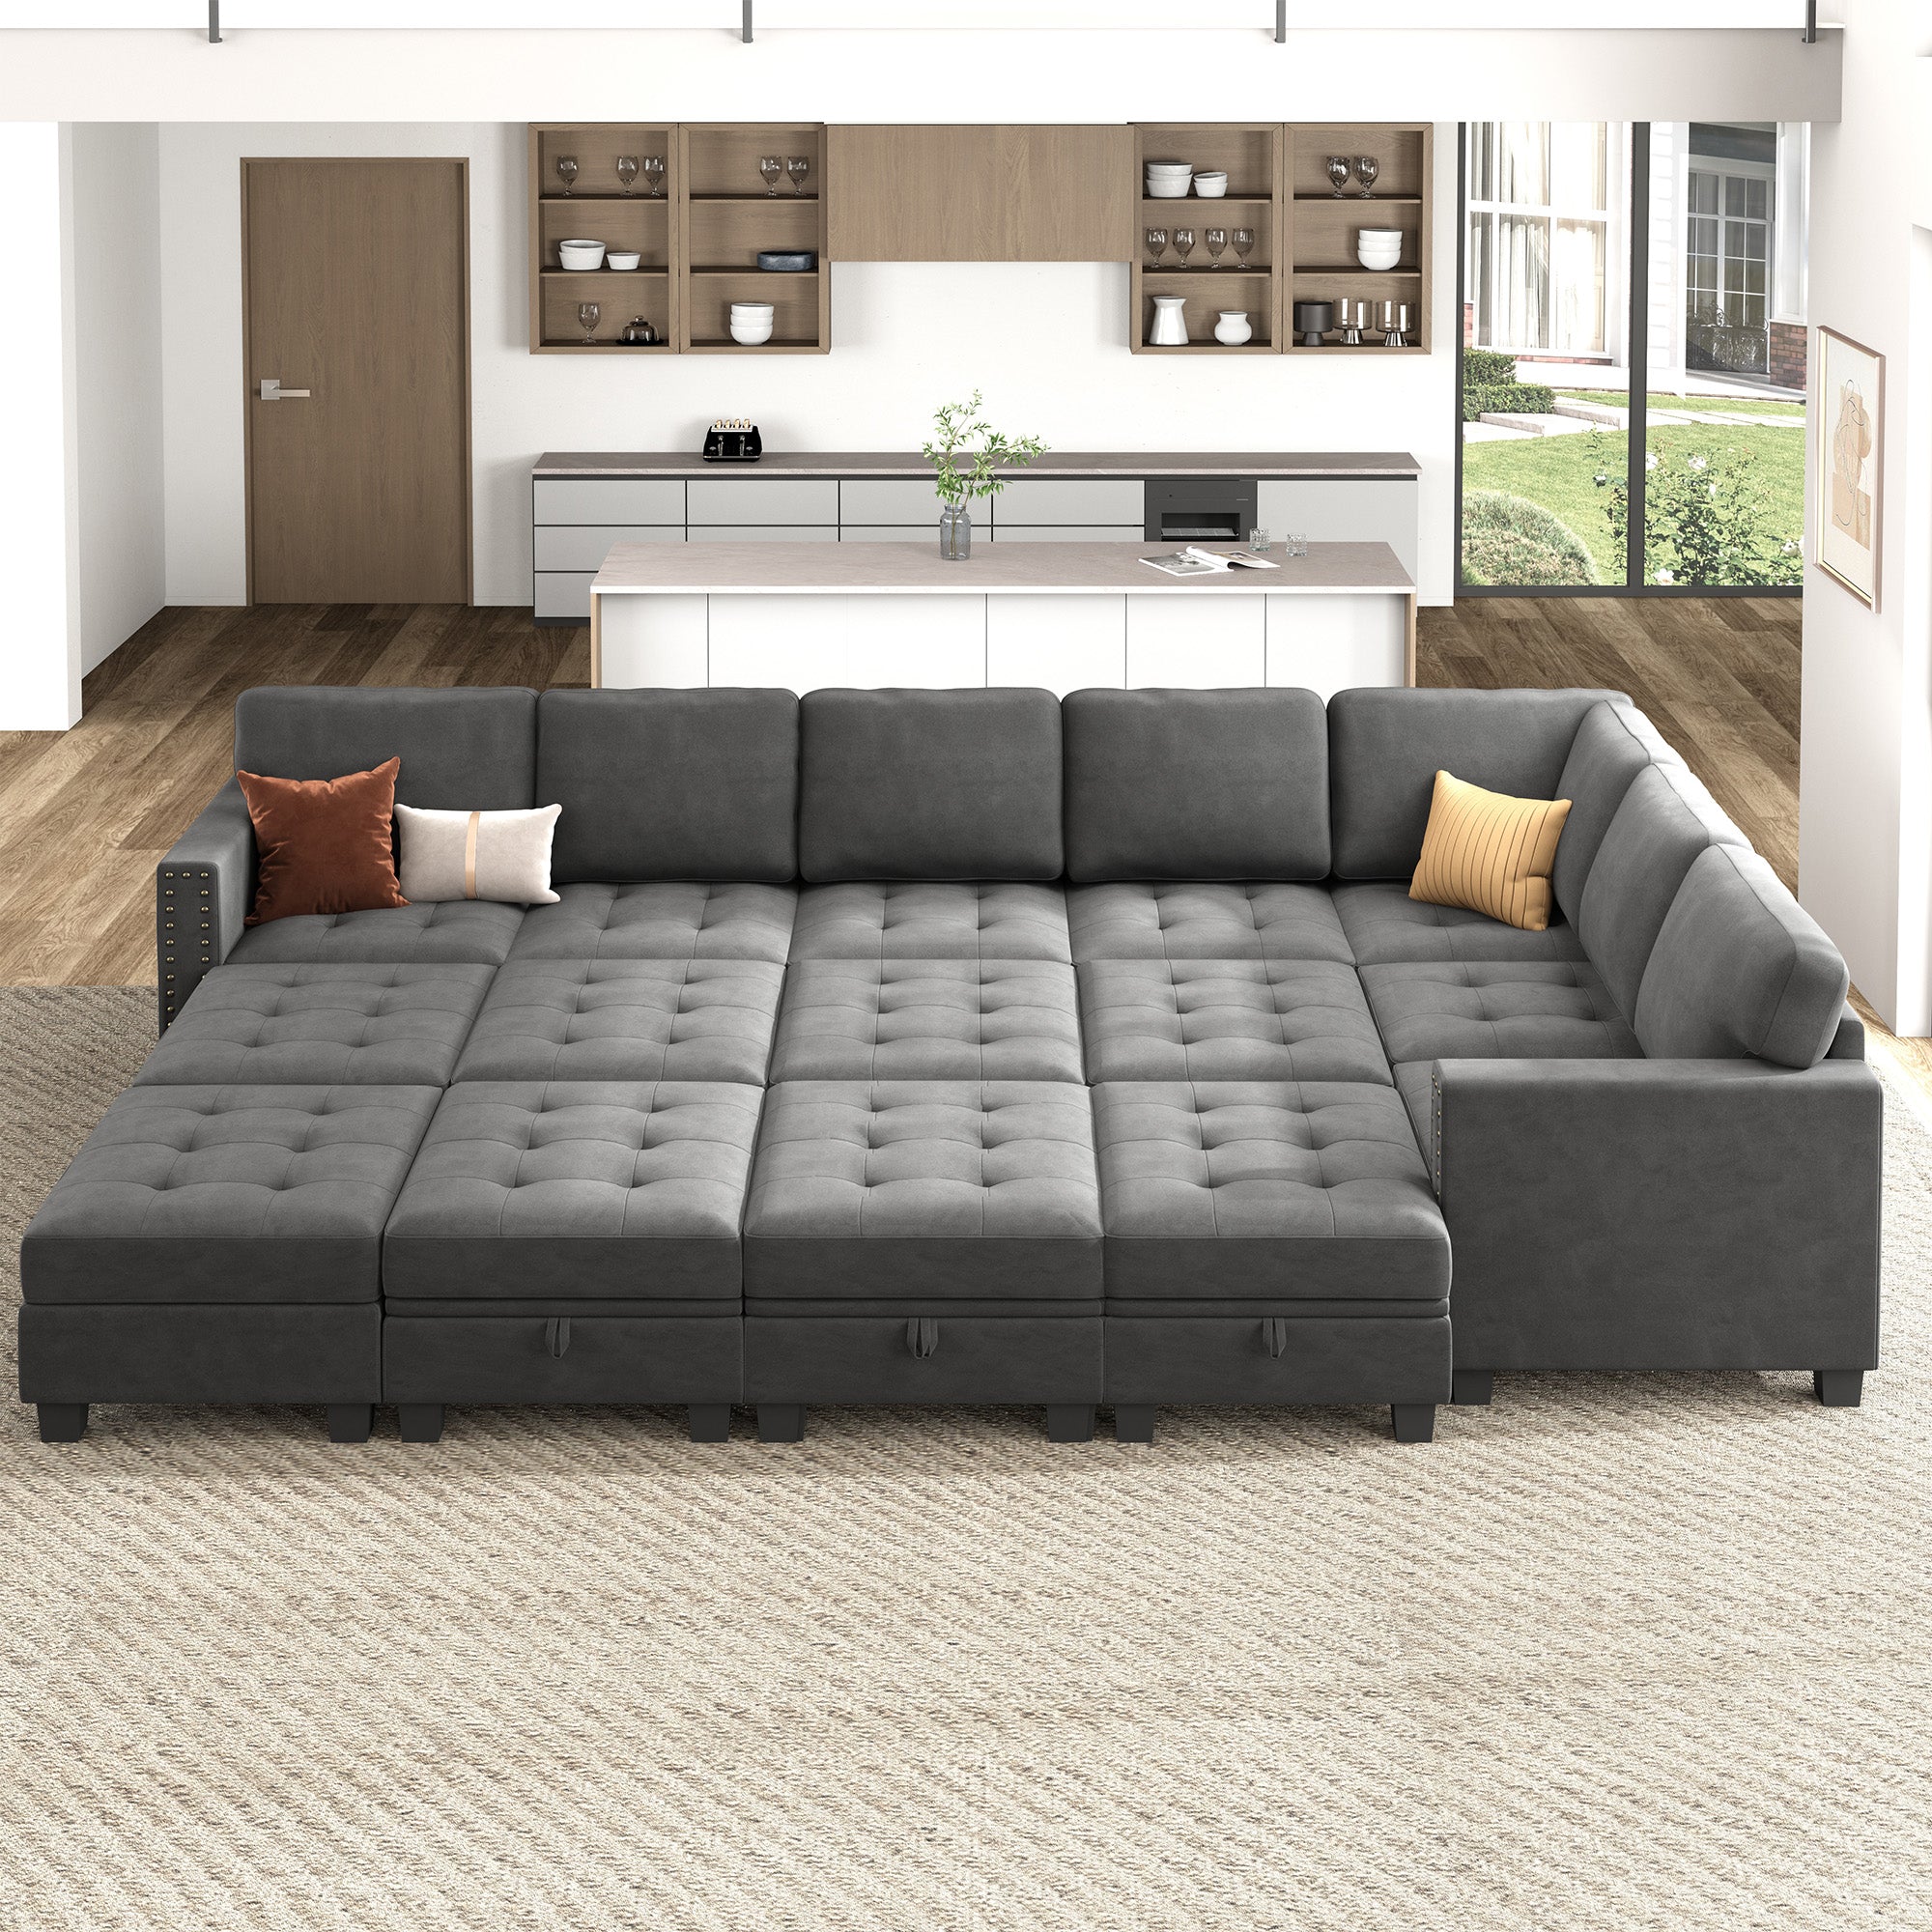 HONBAY Wraparound Modular Sofa 15-Seat With 6-Storage Space+1-Left Arm+1-Right Arm #Color_Grey